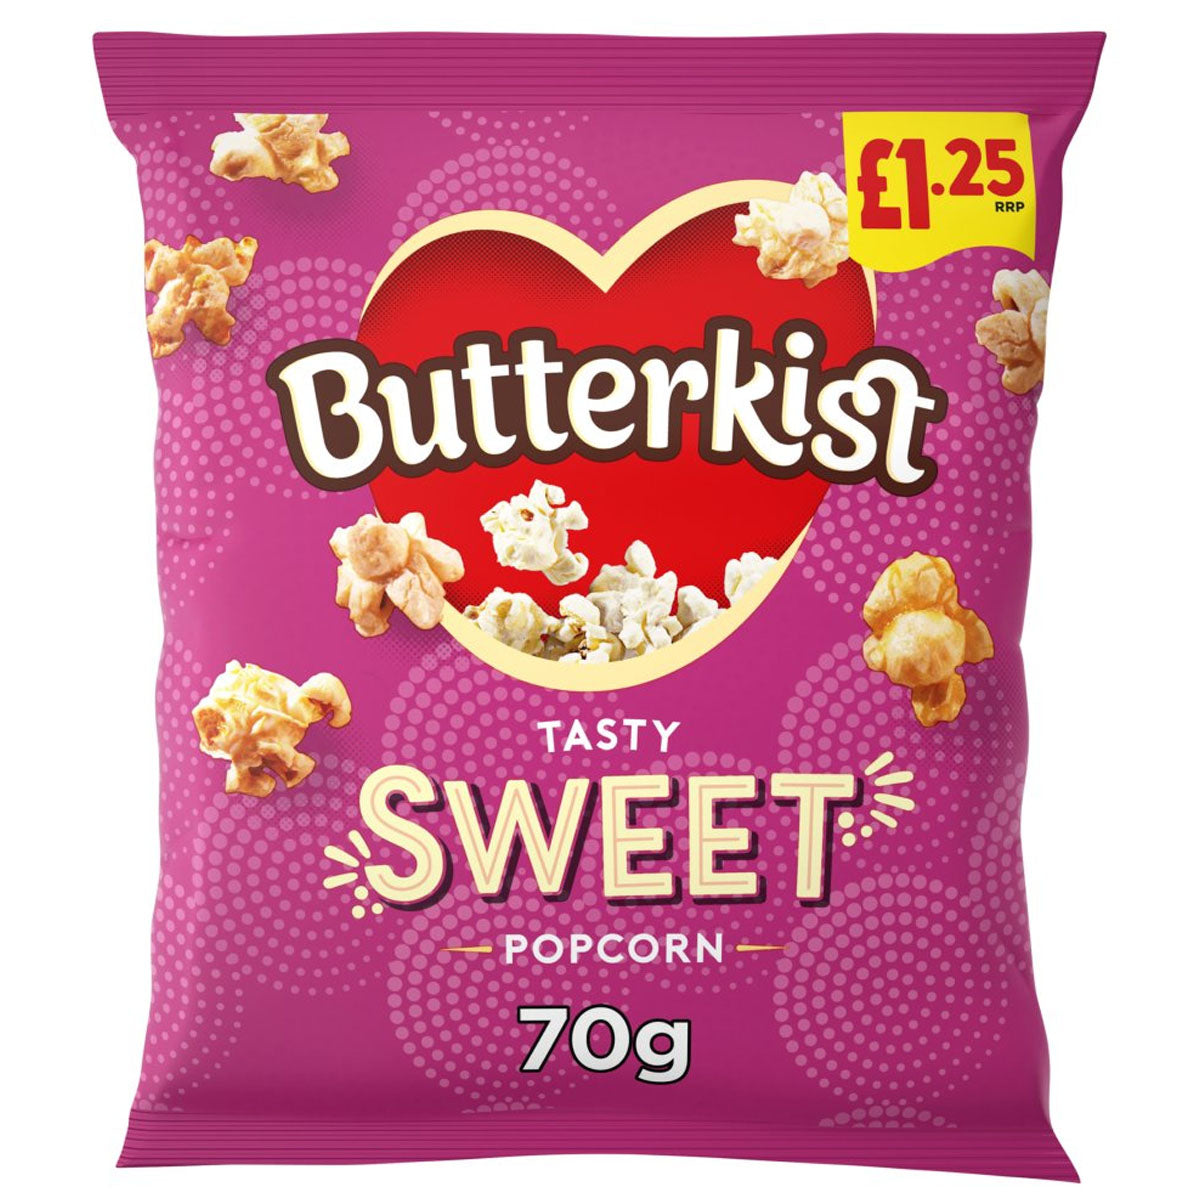 Butterkist - Sweet Popcorn - 70g - Continental Food Store